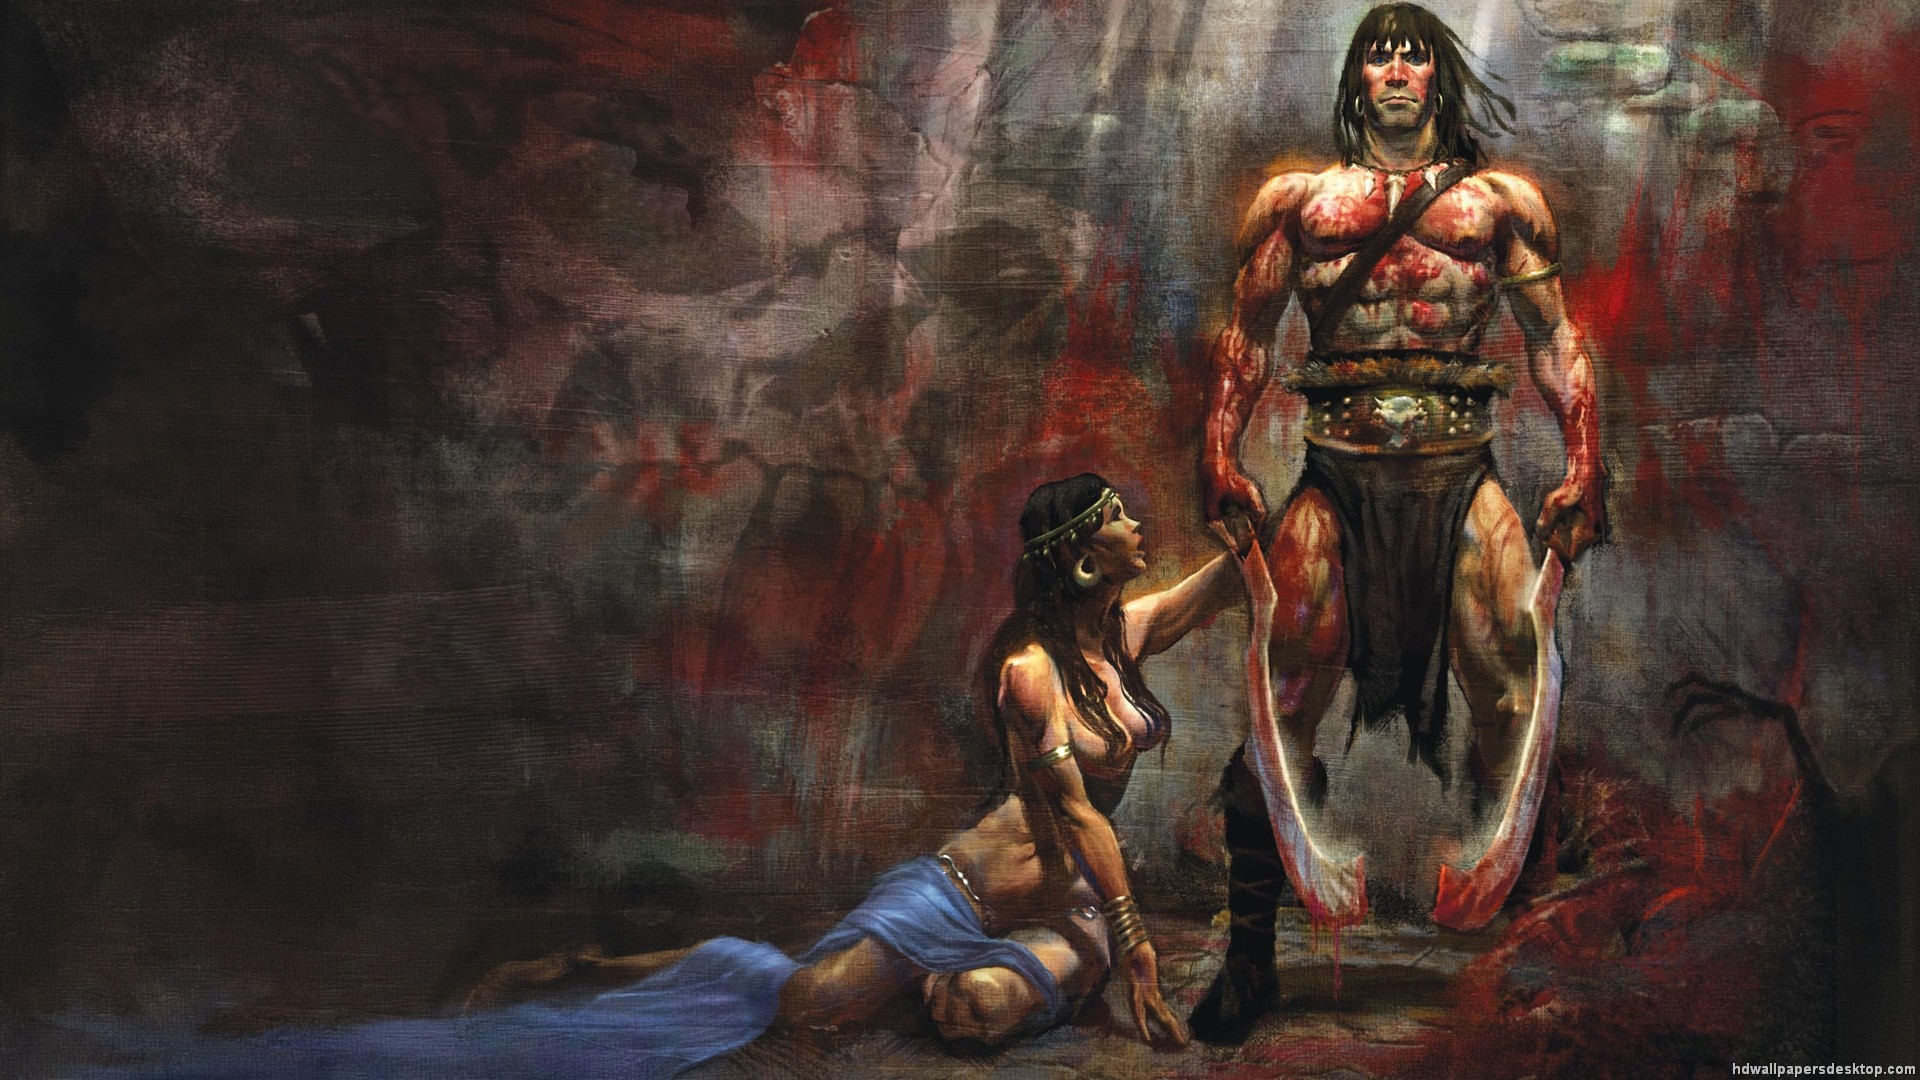 1920x1080 Conan the Barbarian Wallpaper, Conan, Red Sonja Wallpaper, 